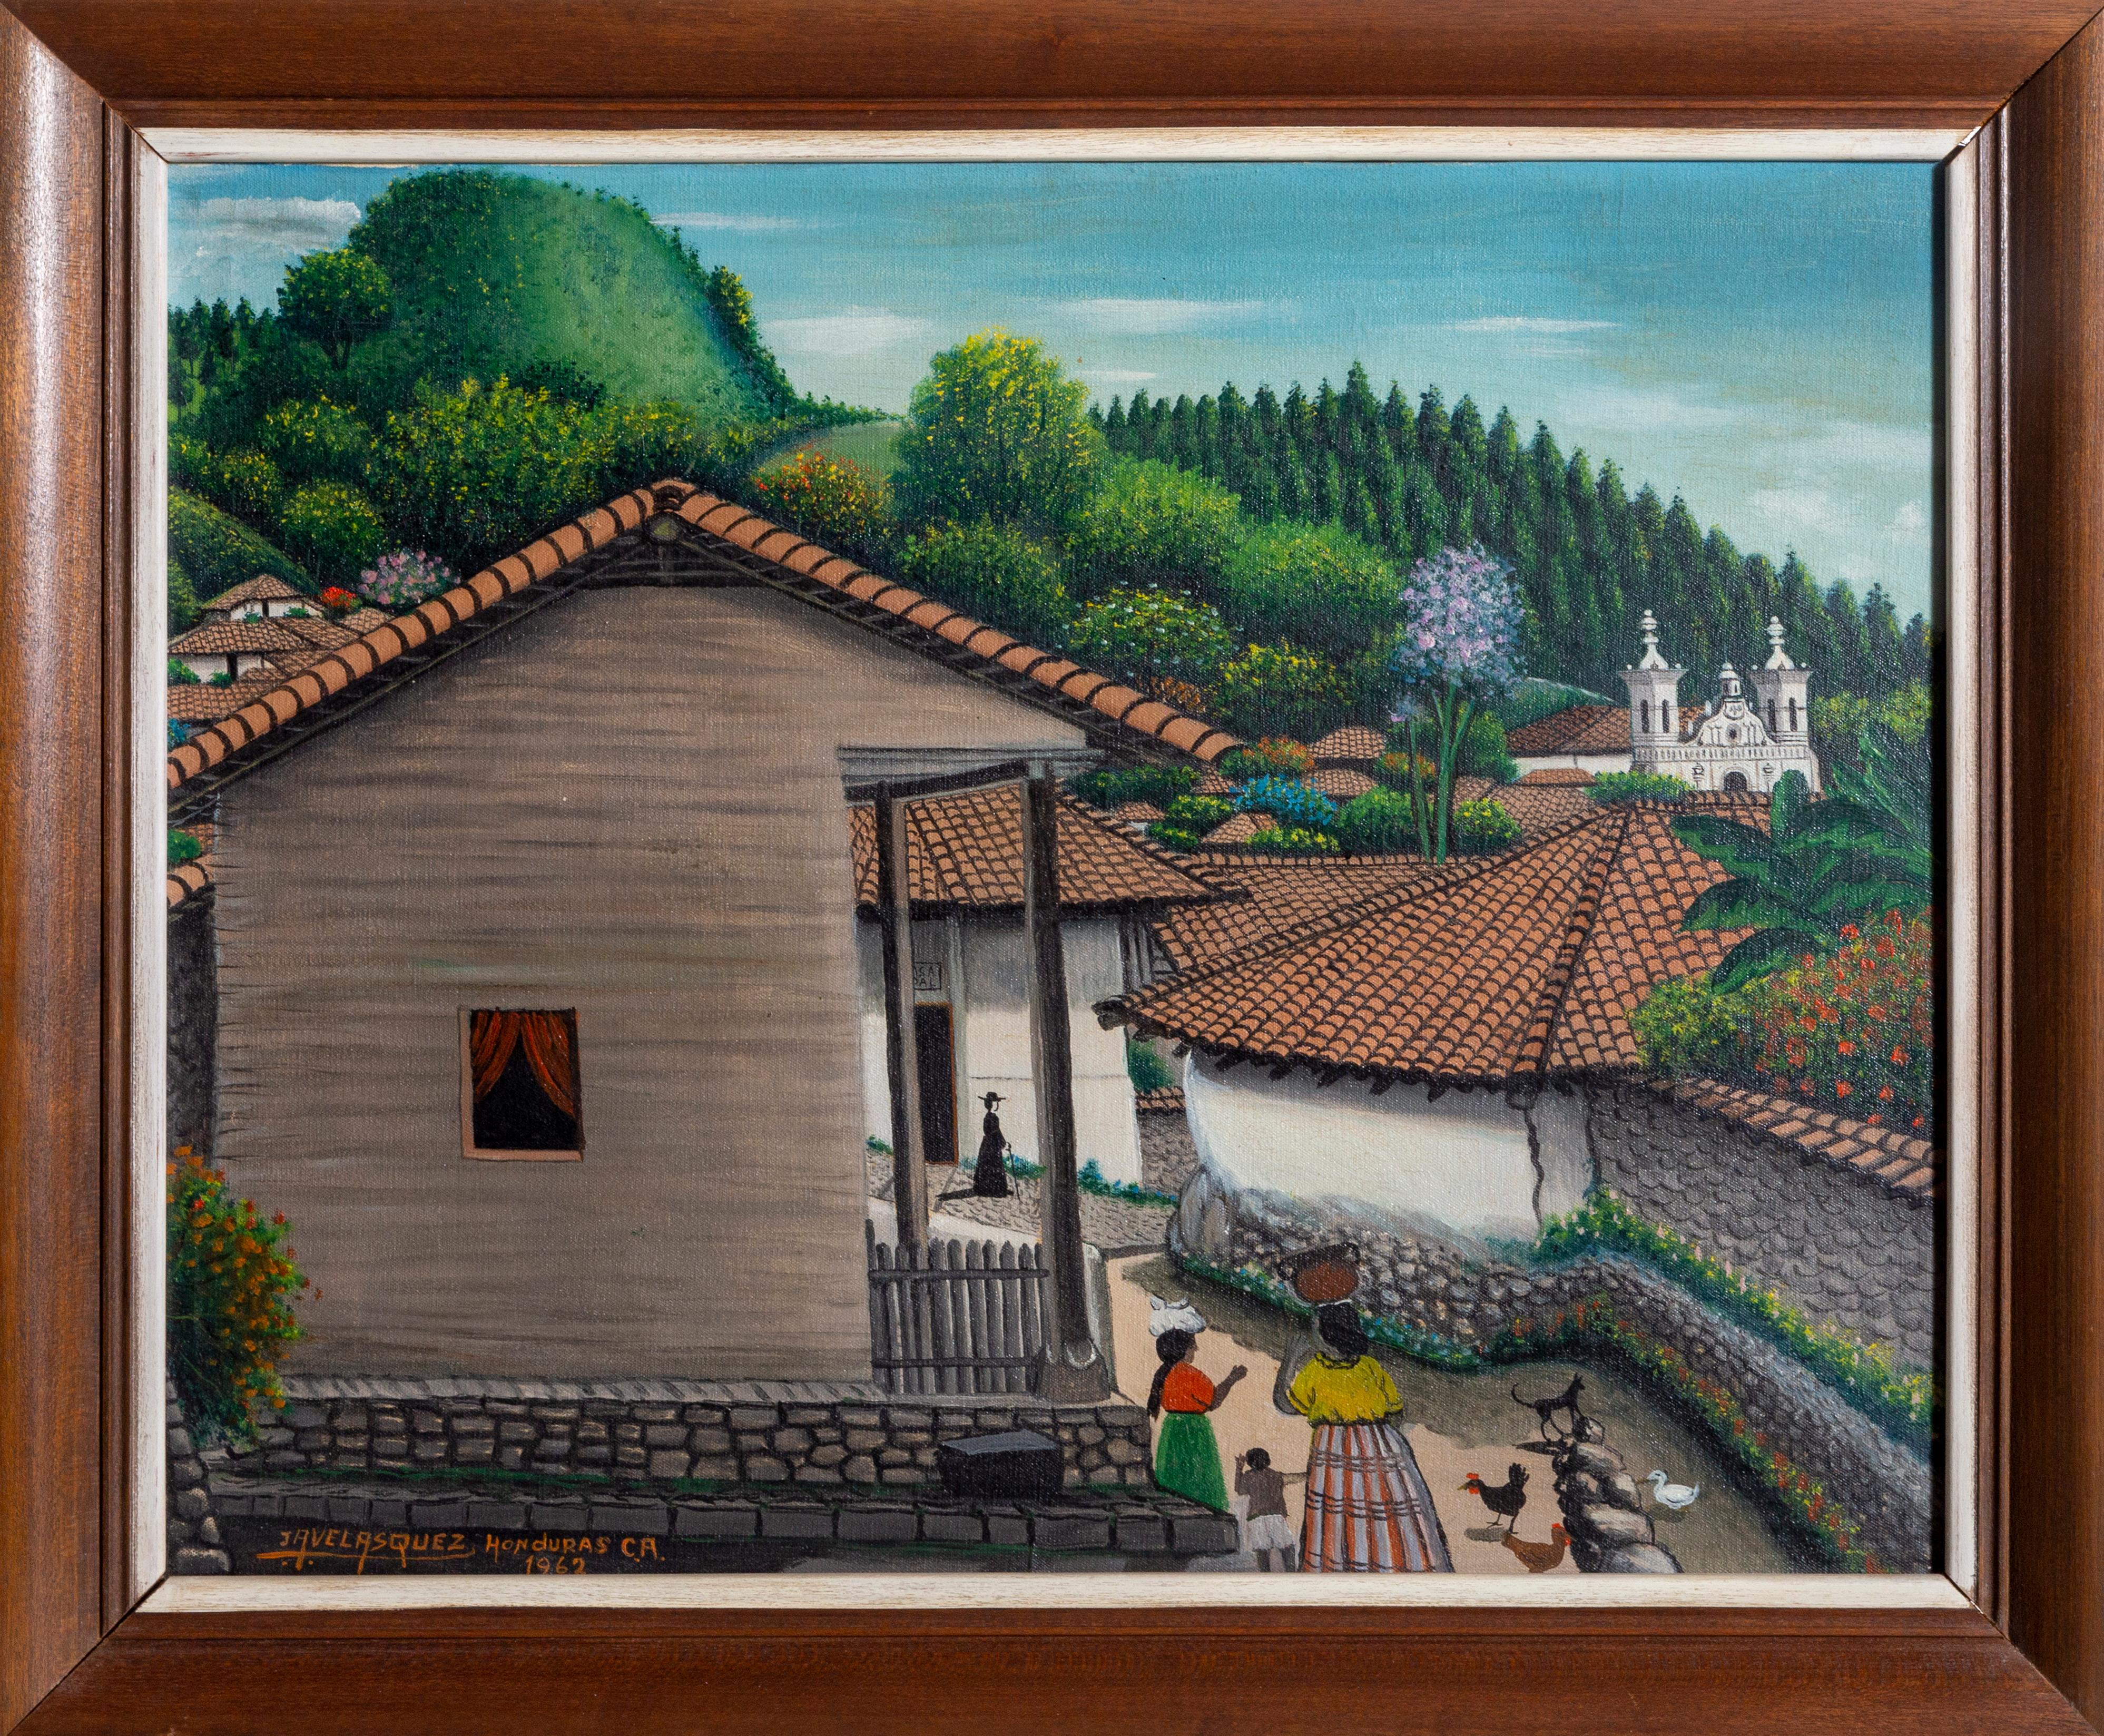 San Antonio de Oriente, Honduras, Painting by Jose Antonio Velasquez 1962